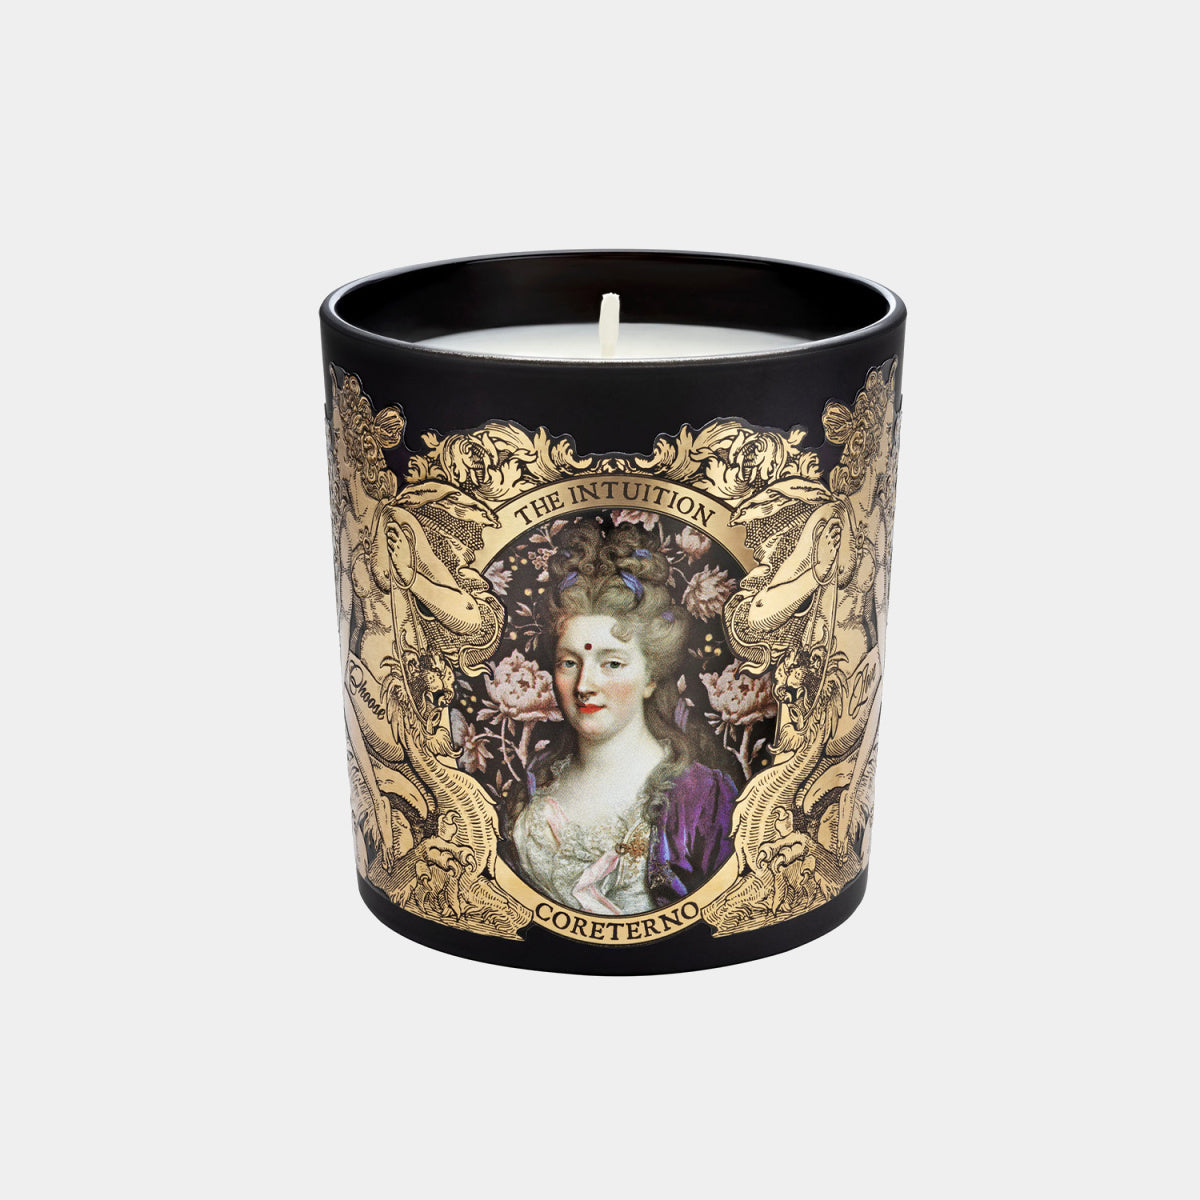 Coreterno Aphrodite vonná svíčka The Intuition - mystické dřevo